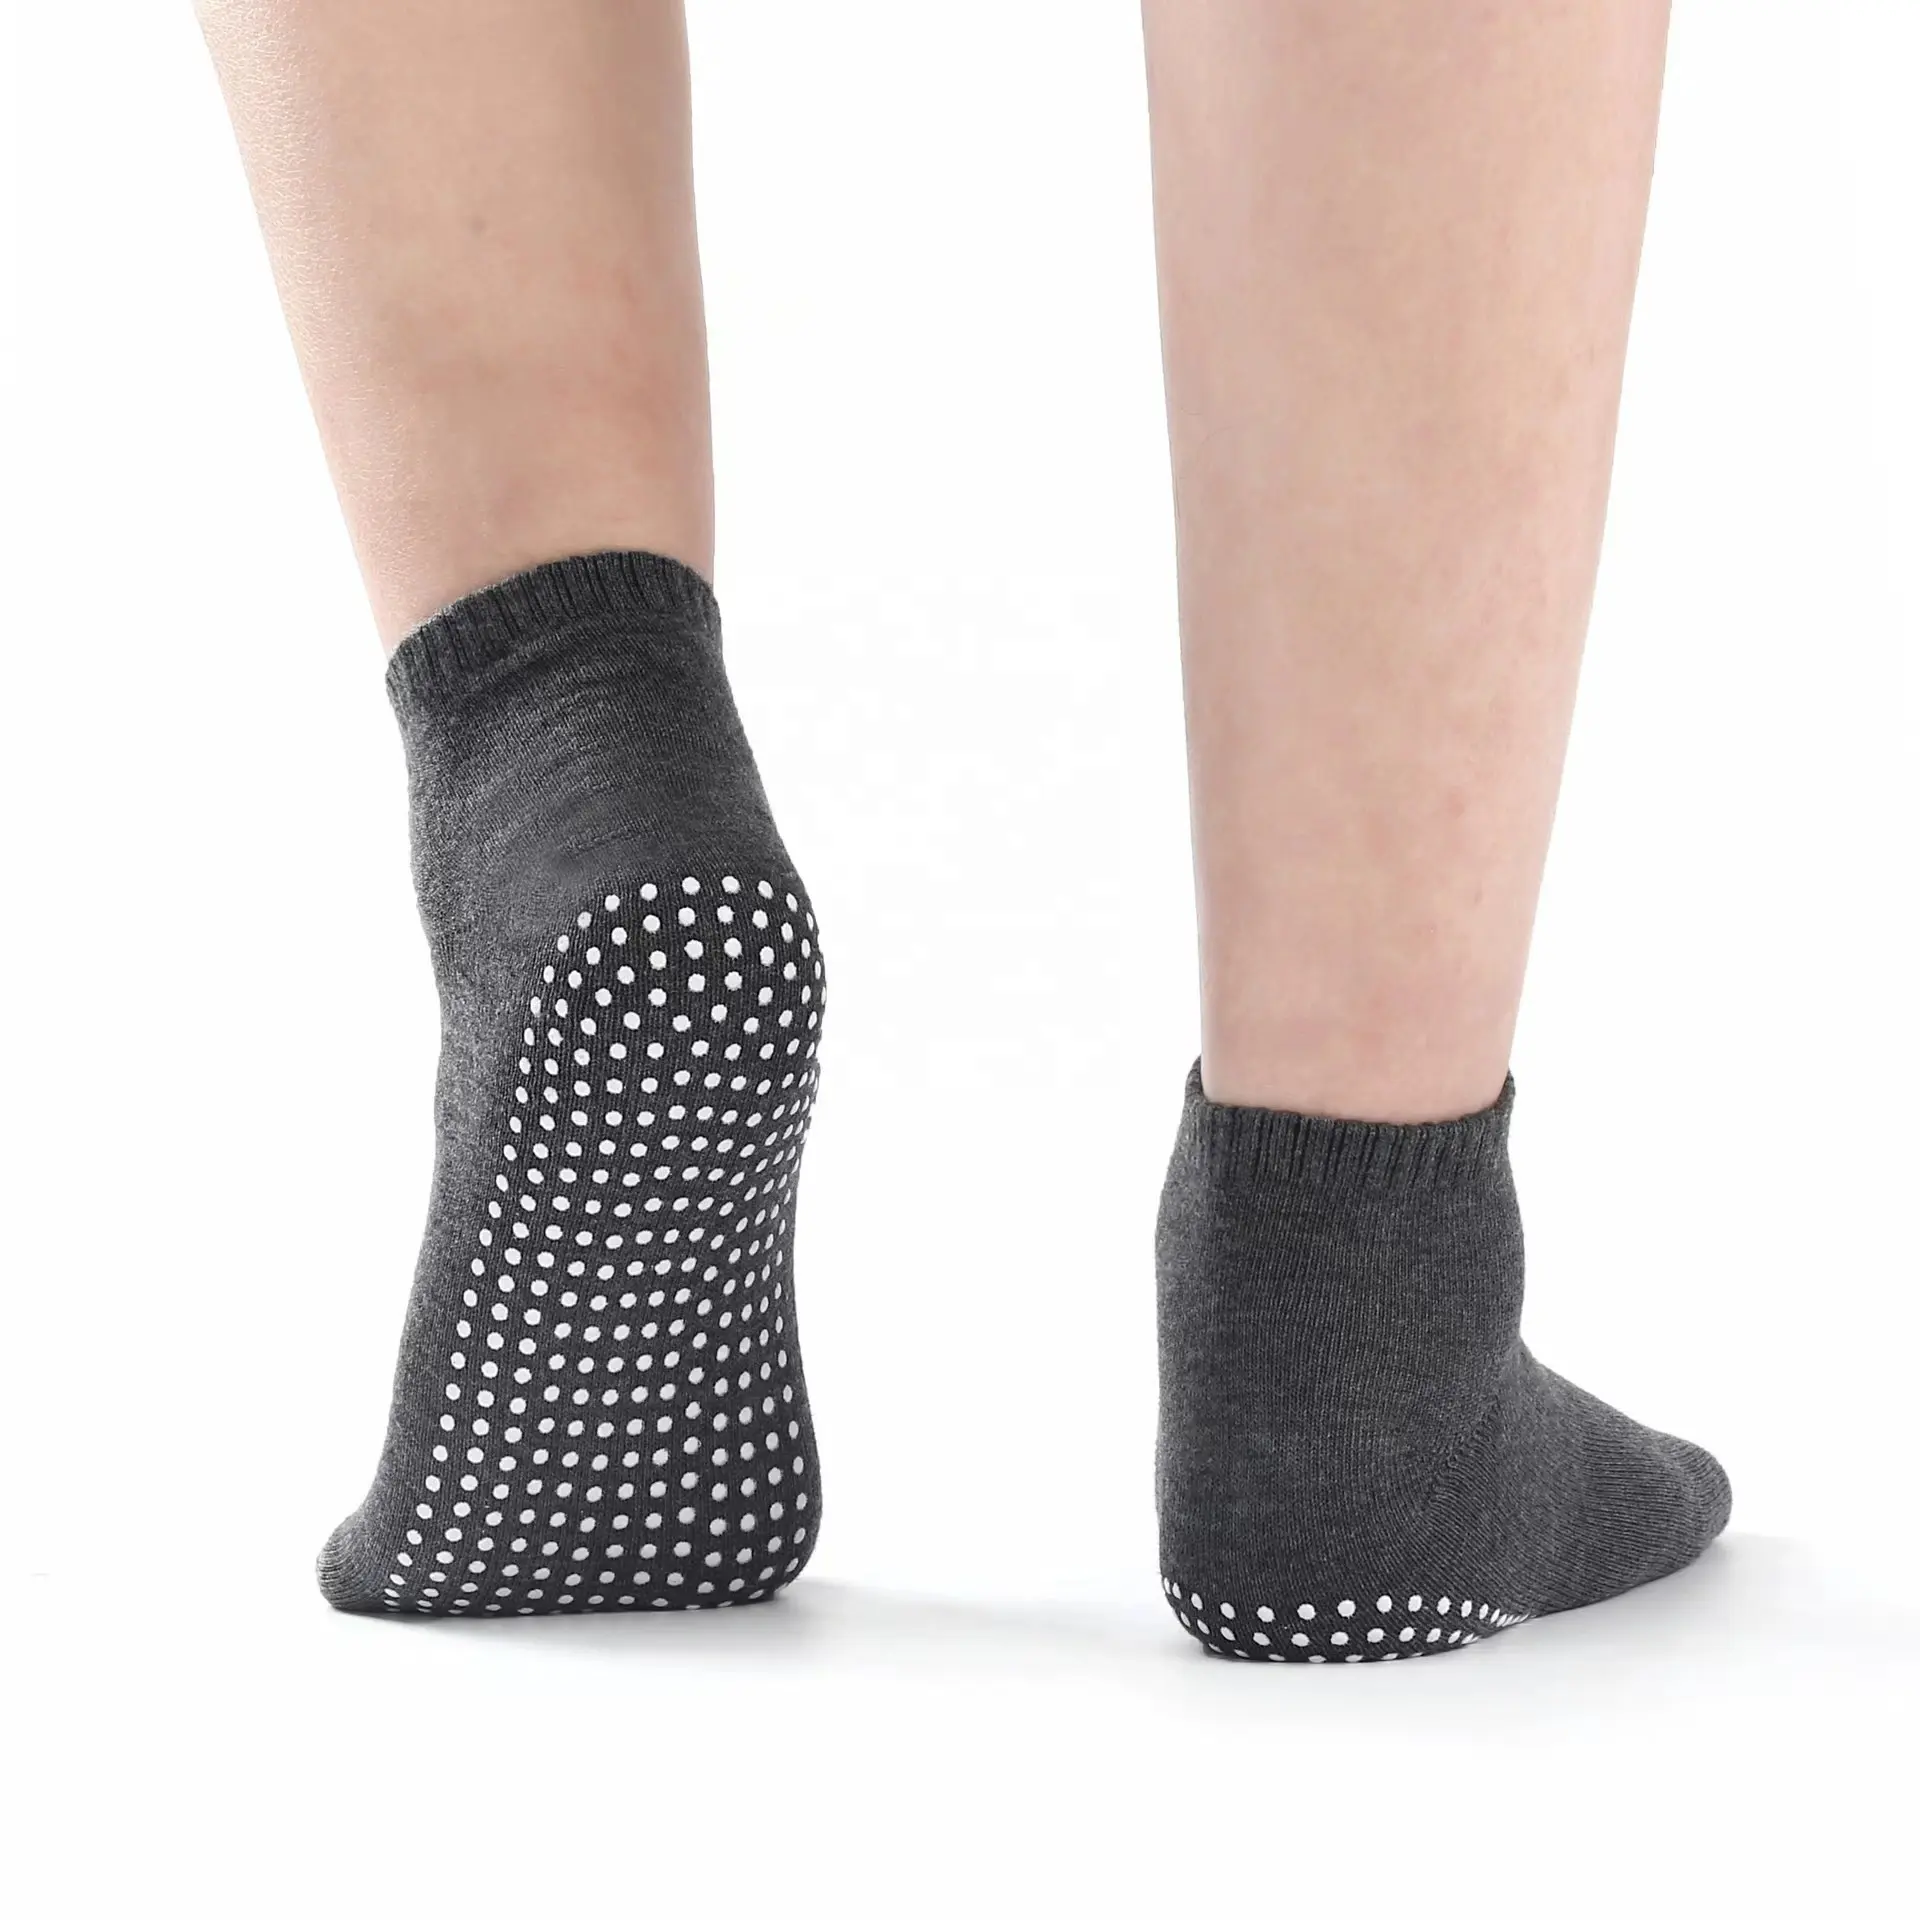 high quality sports adult unisex grip ankle socks cotton black mens grip socks anti slip pilates yoga sock for men